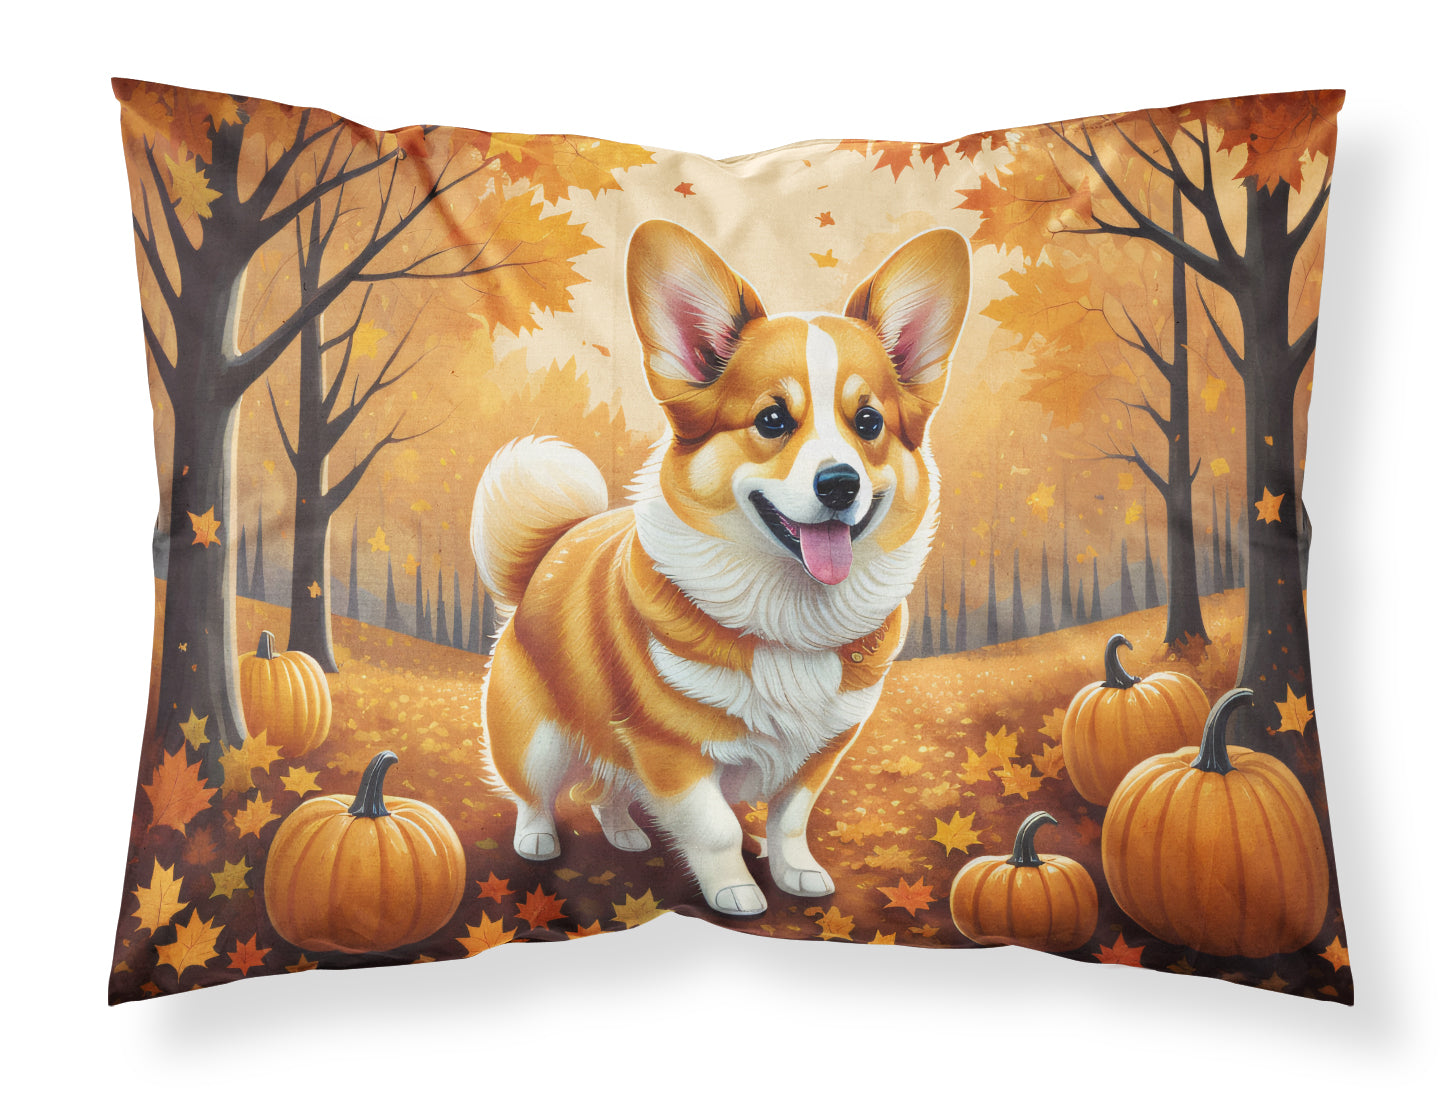 Buy this Corgi Fall Fabric Standard Pillowcase